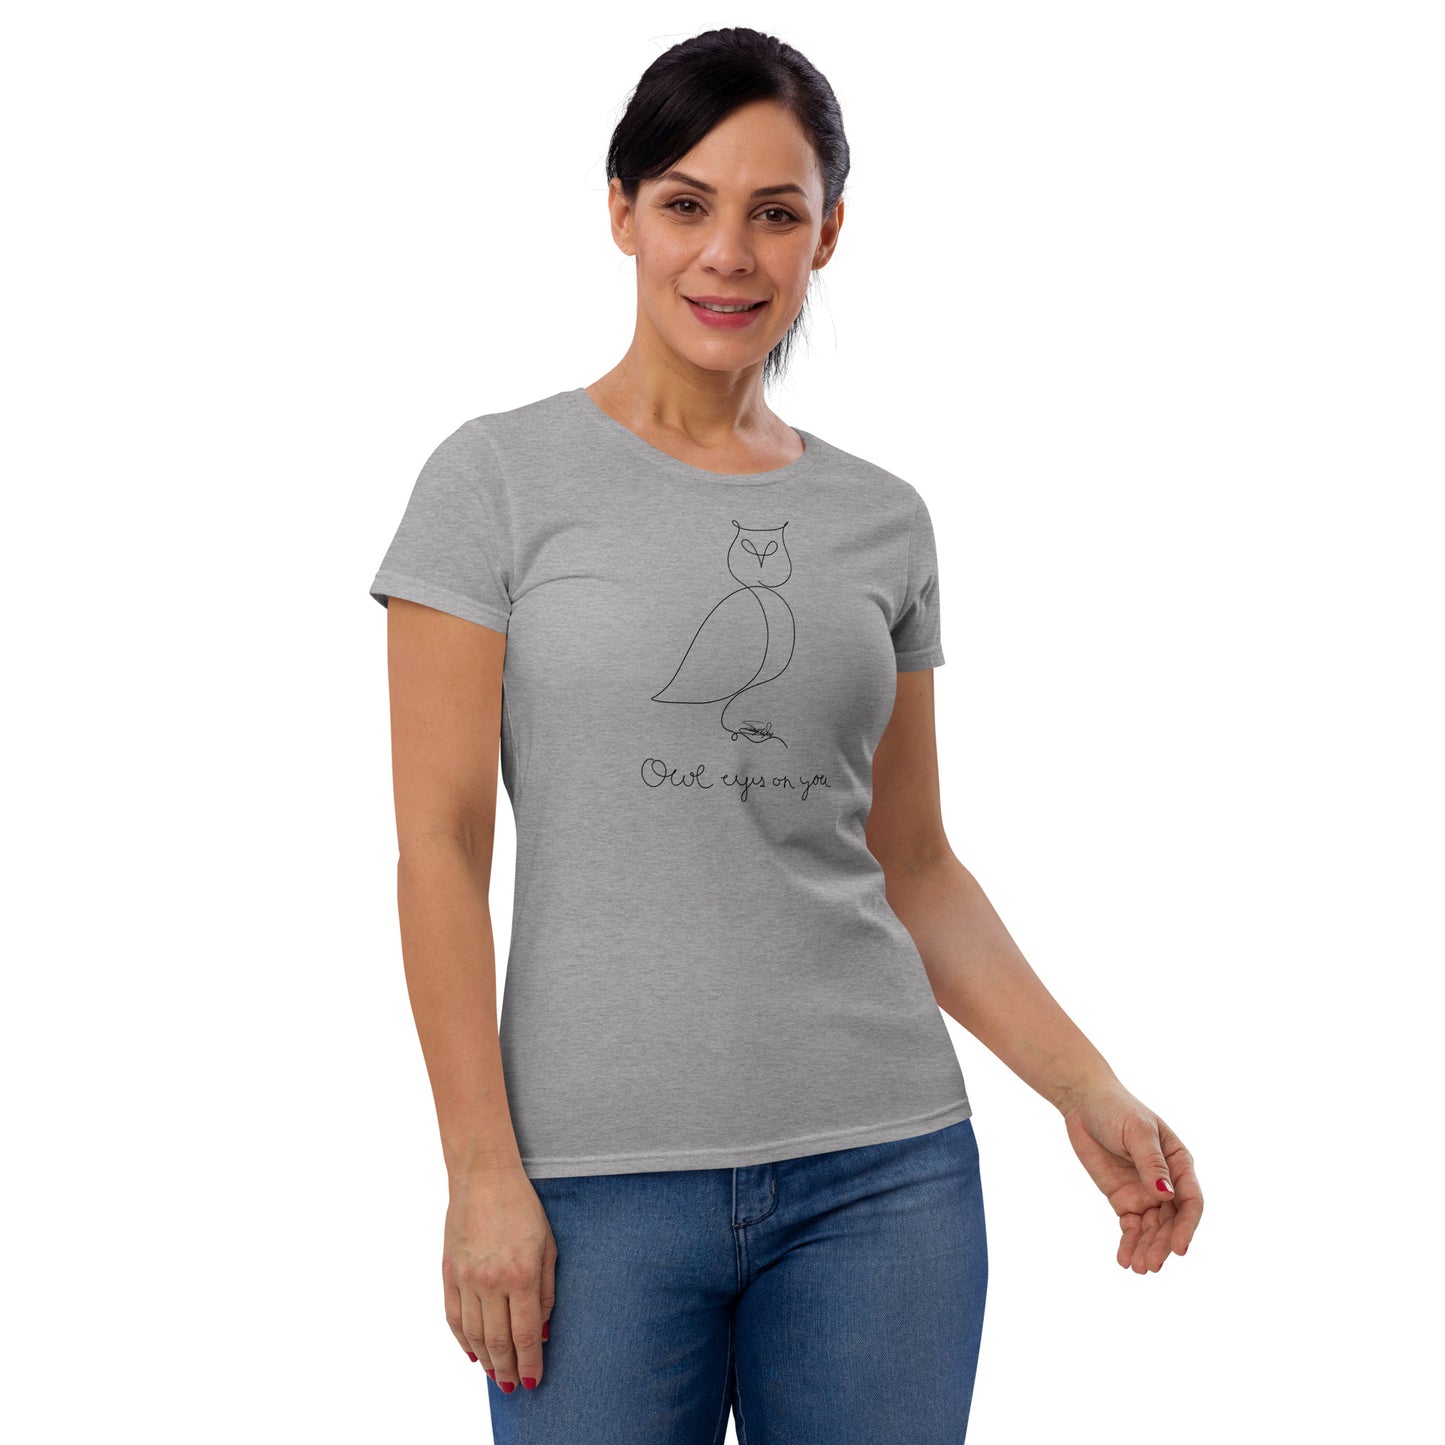 Owl eyes on you - Women's short sleeve t-shirt